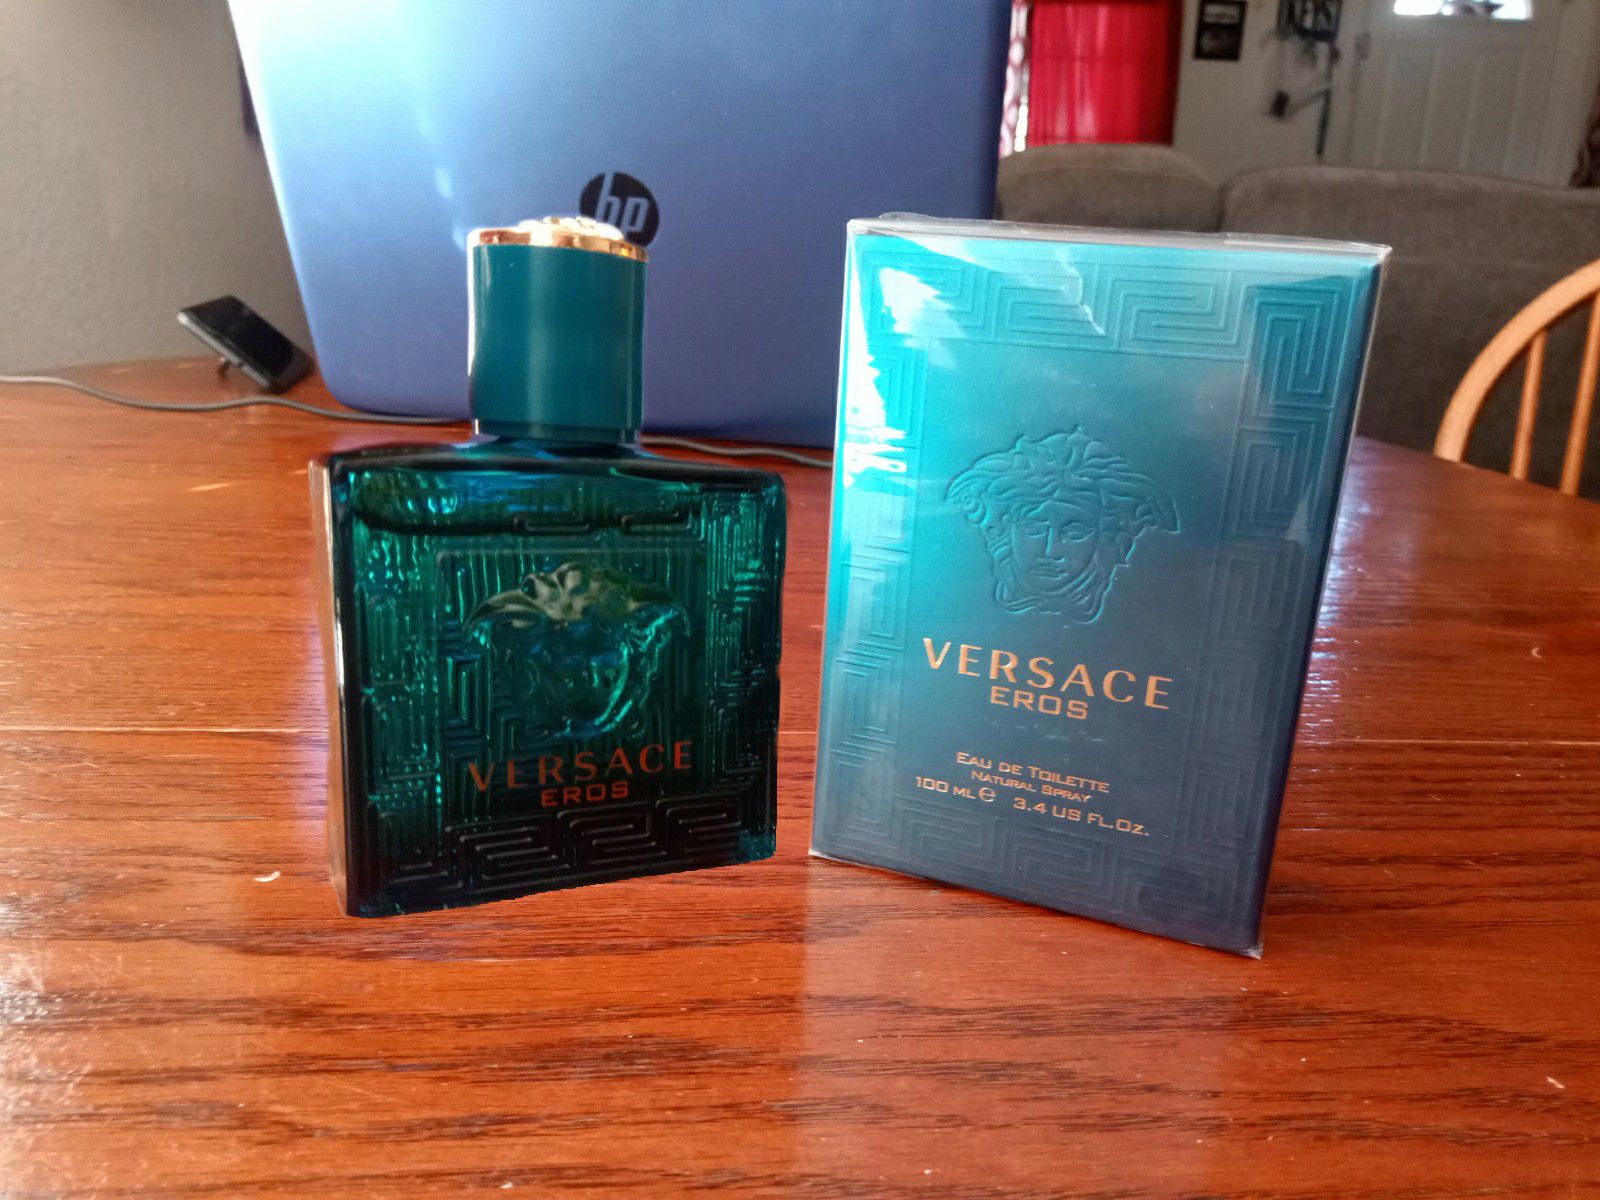 Versace Eros Fragrance Cologne Perfume